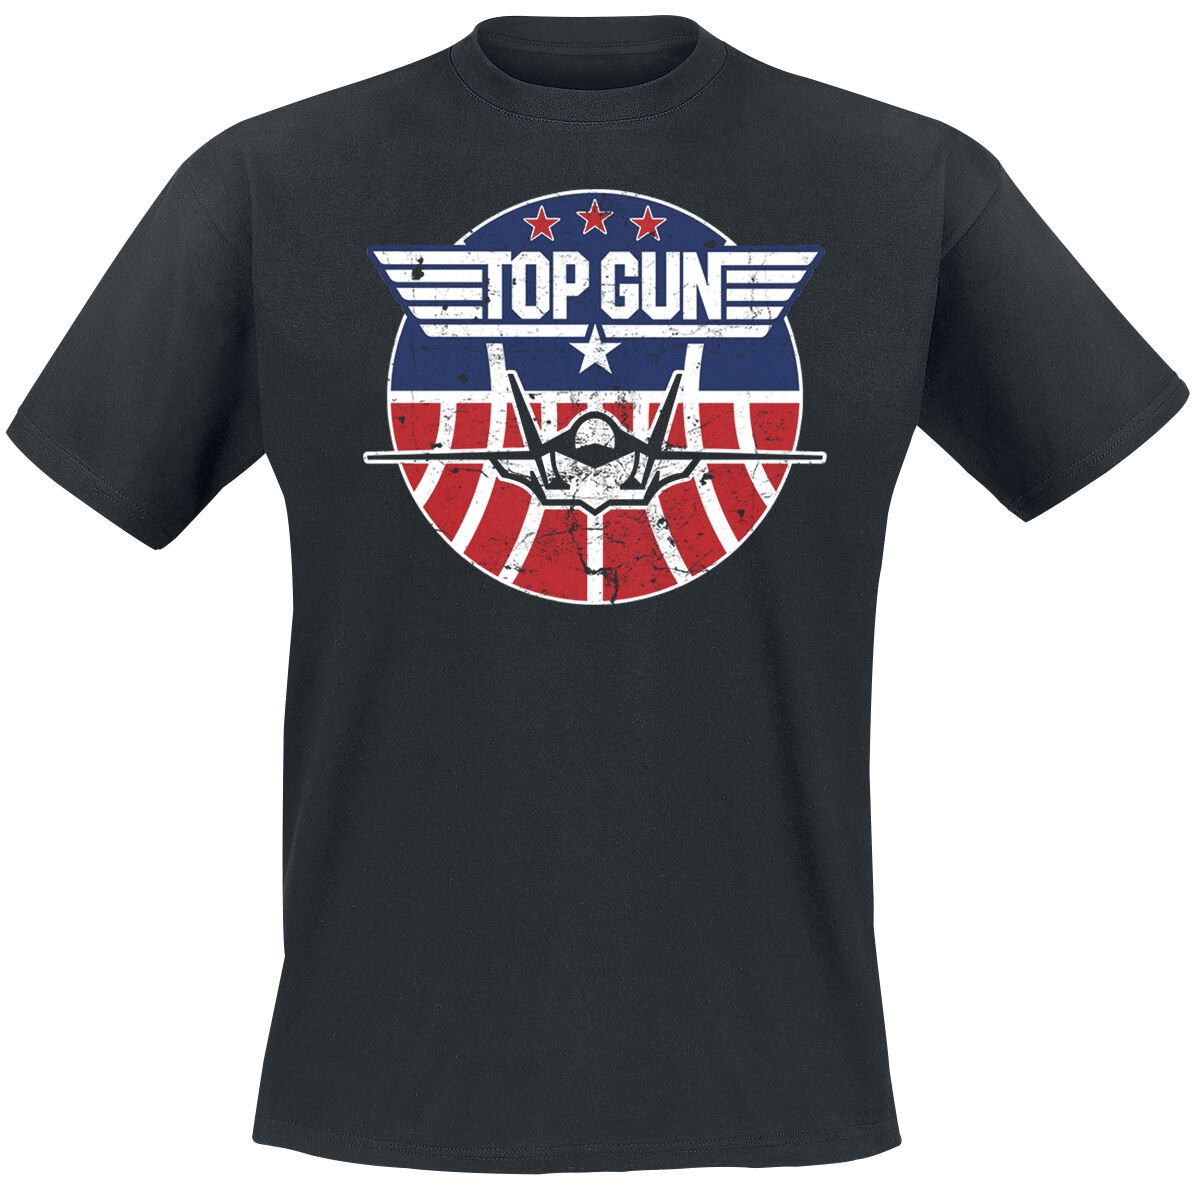 Top Gun T-Shirt - Maverick - Tomcat - S bis 5XL - für Männer - Größe XL - schwarz  - Lizenzierter Fanartikel